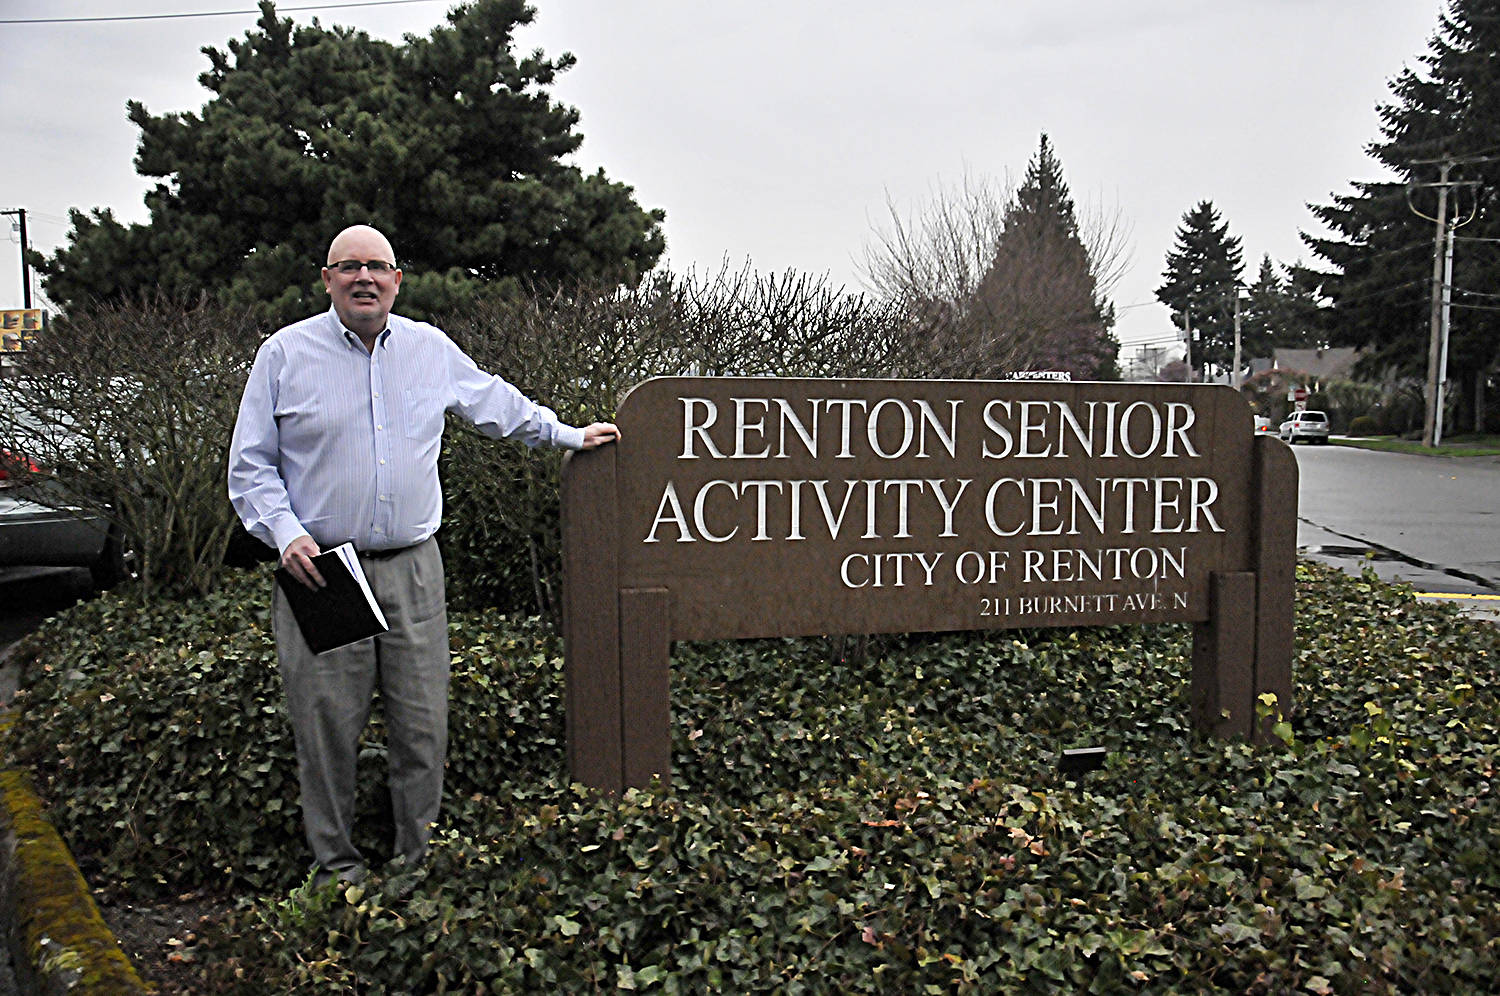 Shawn Daly bids adieu to senior center after 36 years | SENIOR LIVING